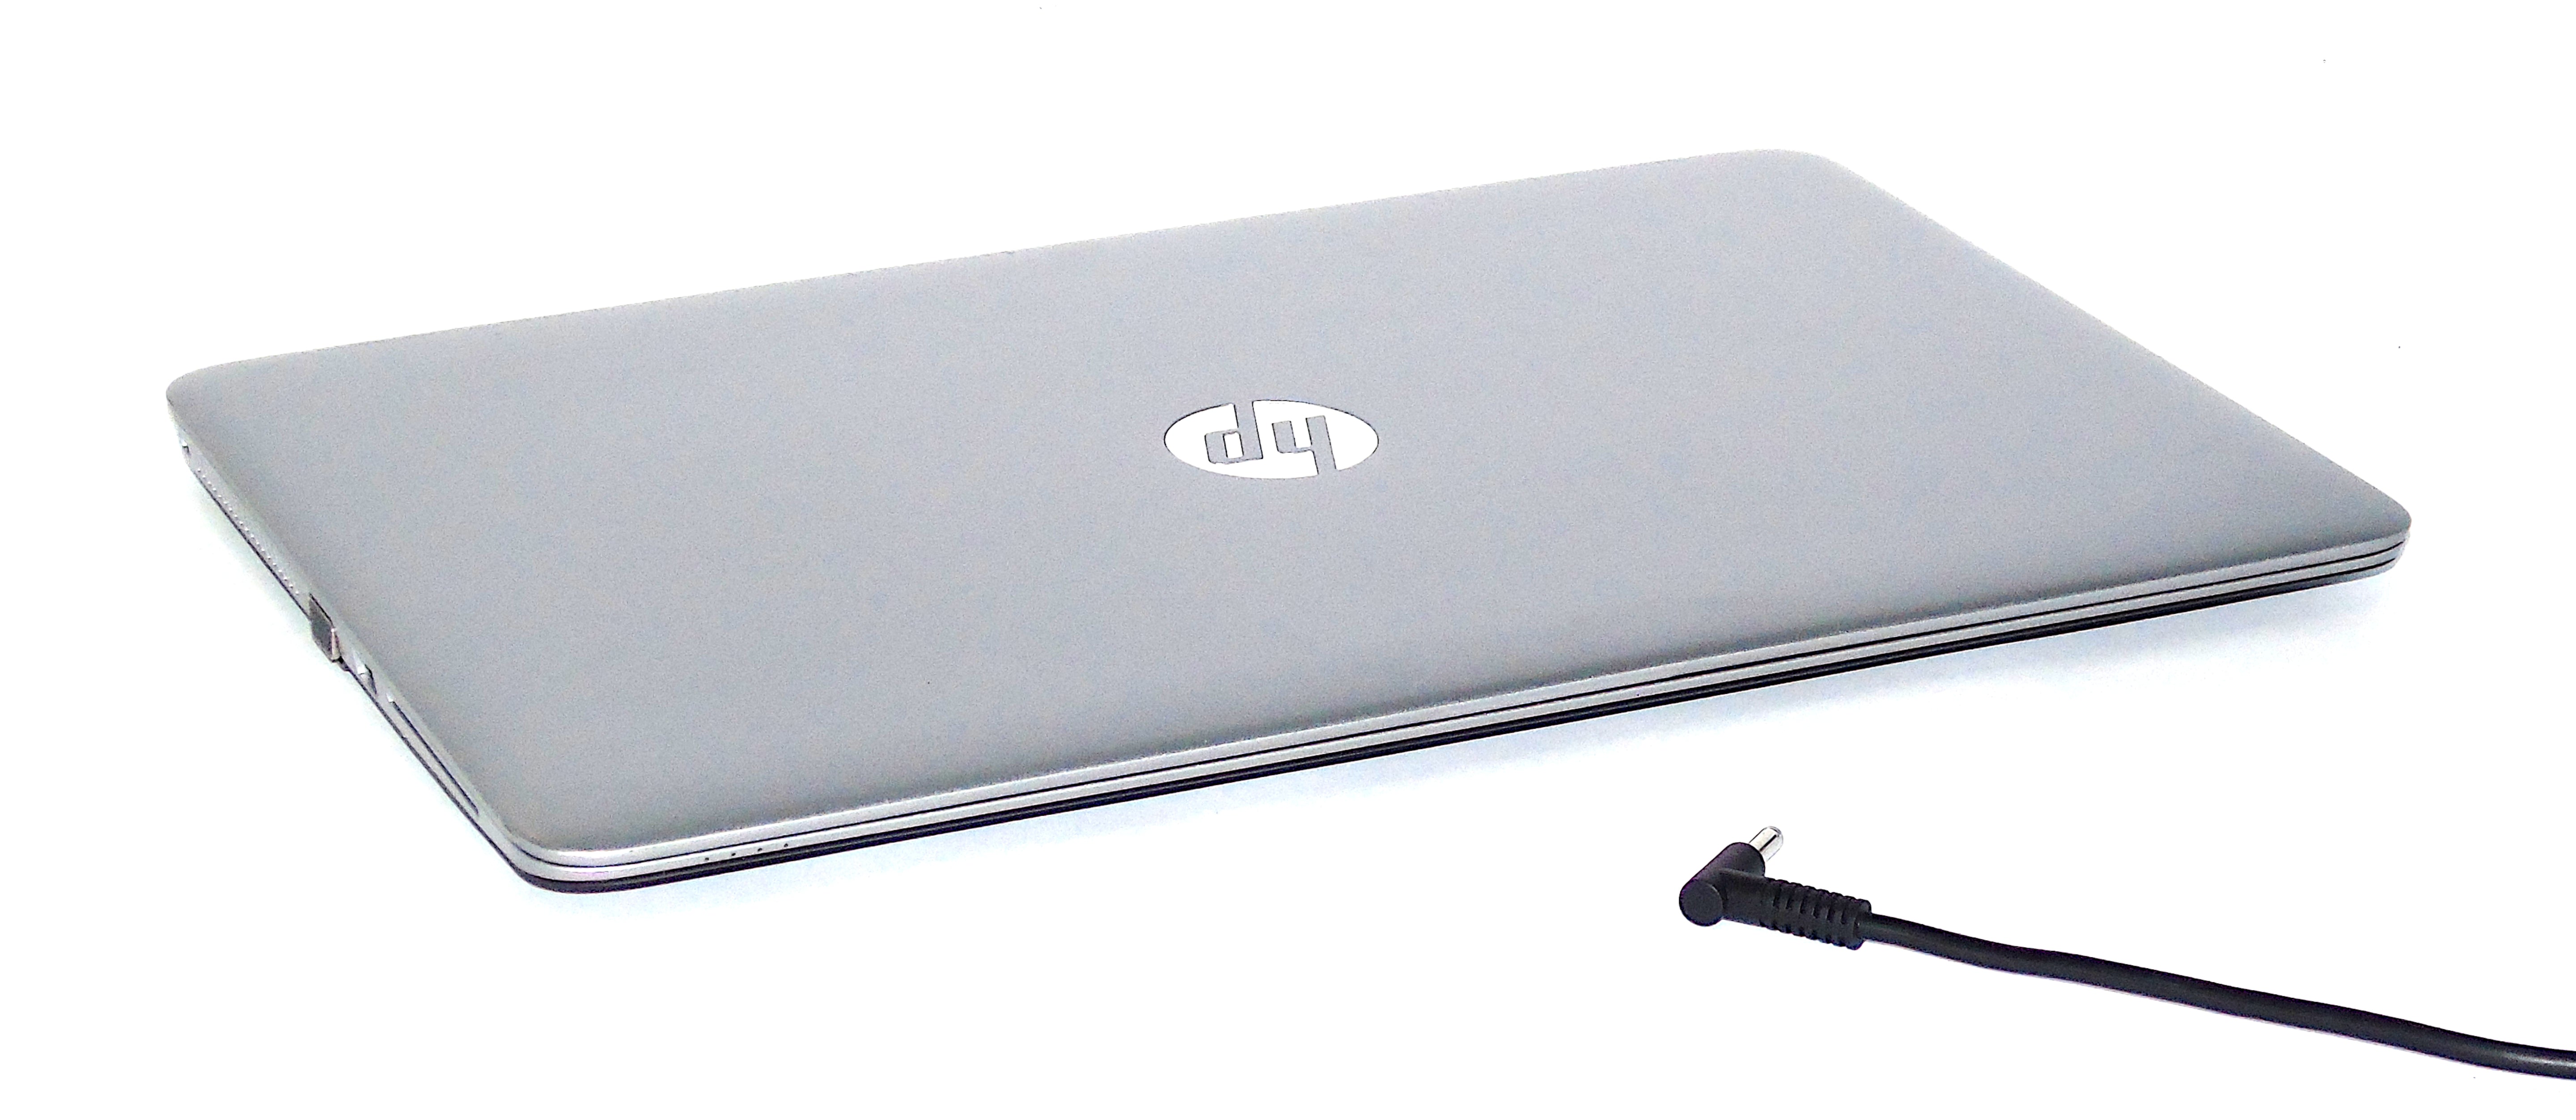 HP EliteBook 850 G3 Laptop, 15.6" Intel Core i5, 8GB RAM, 256GB SSD